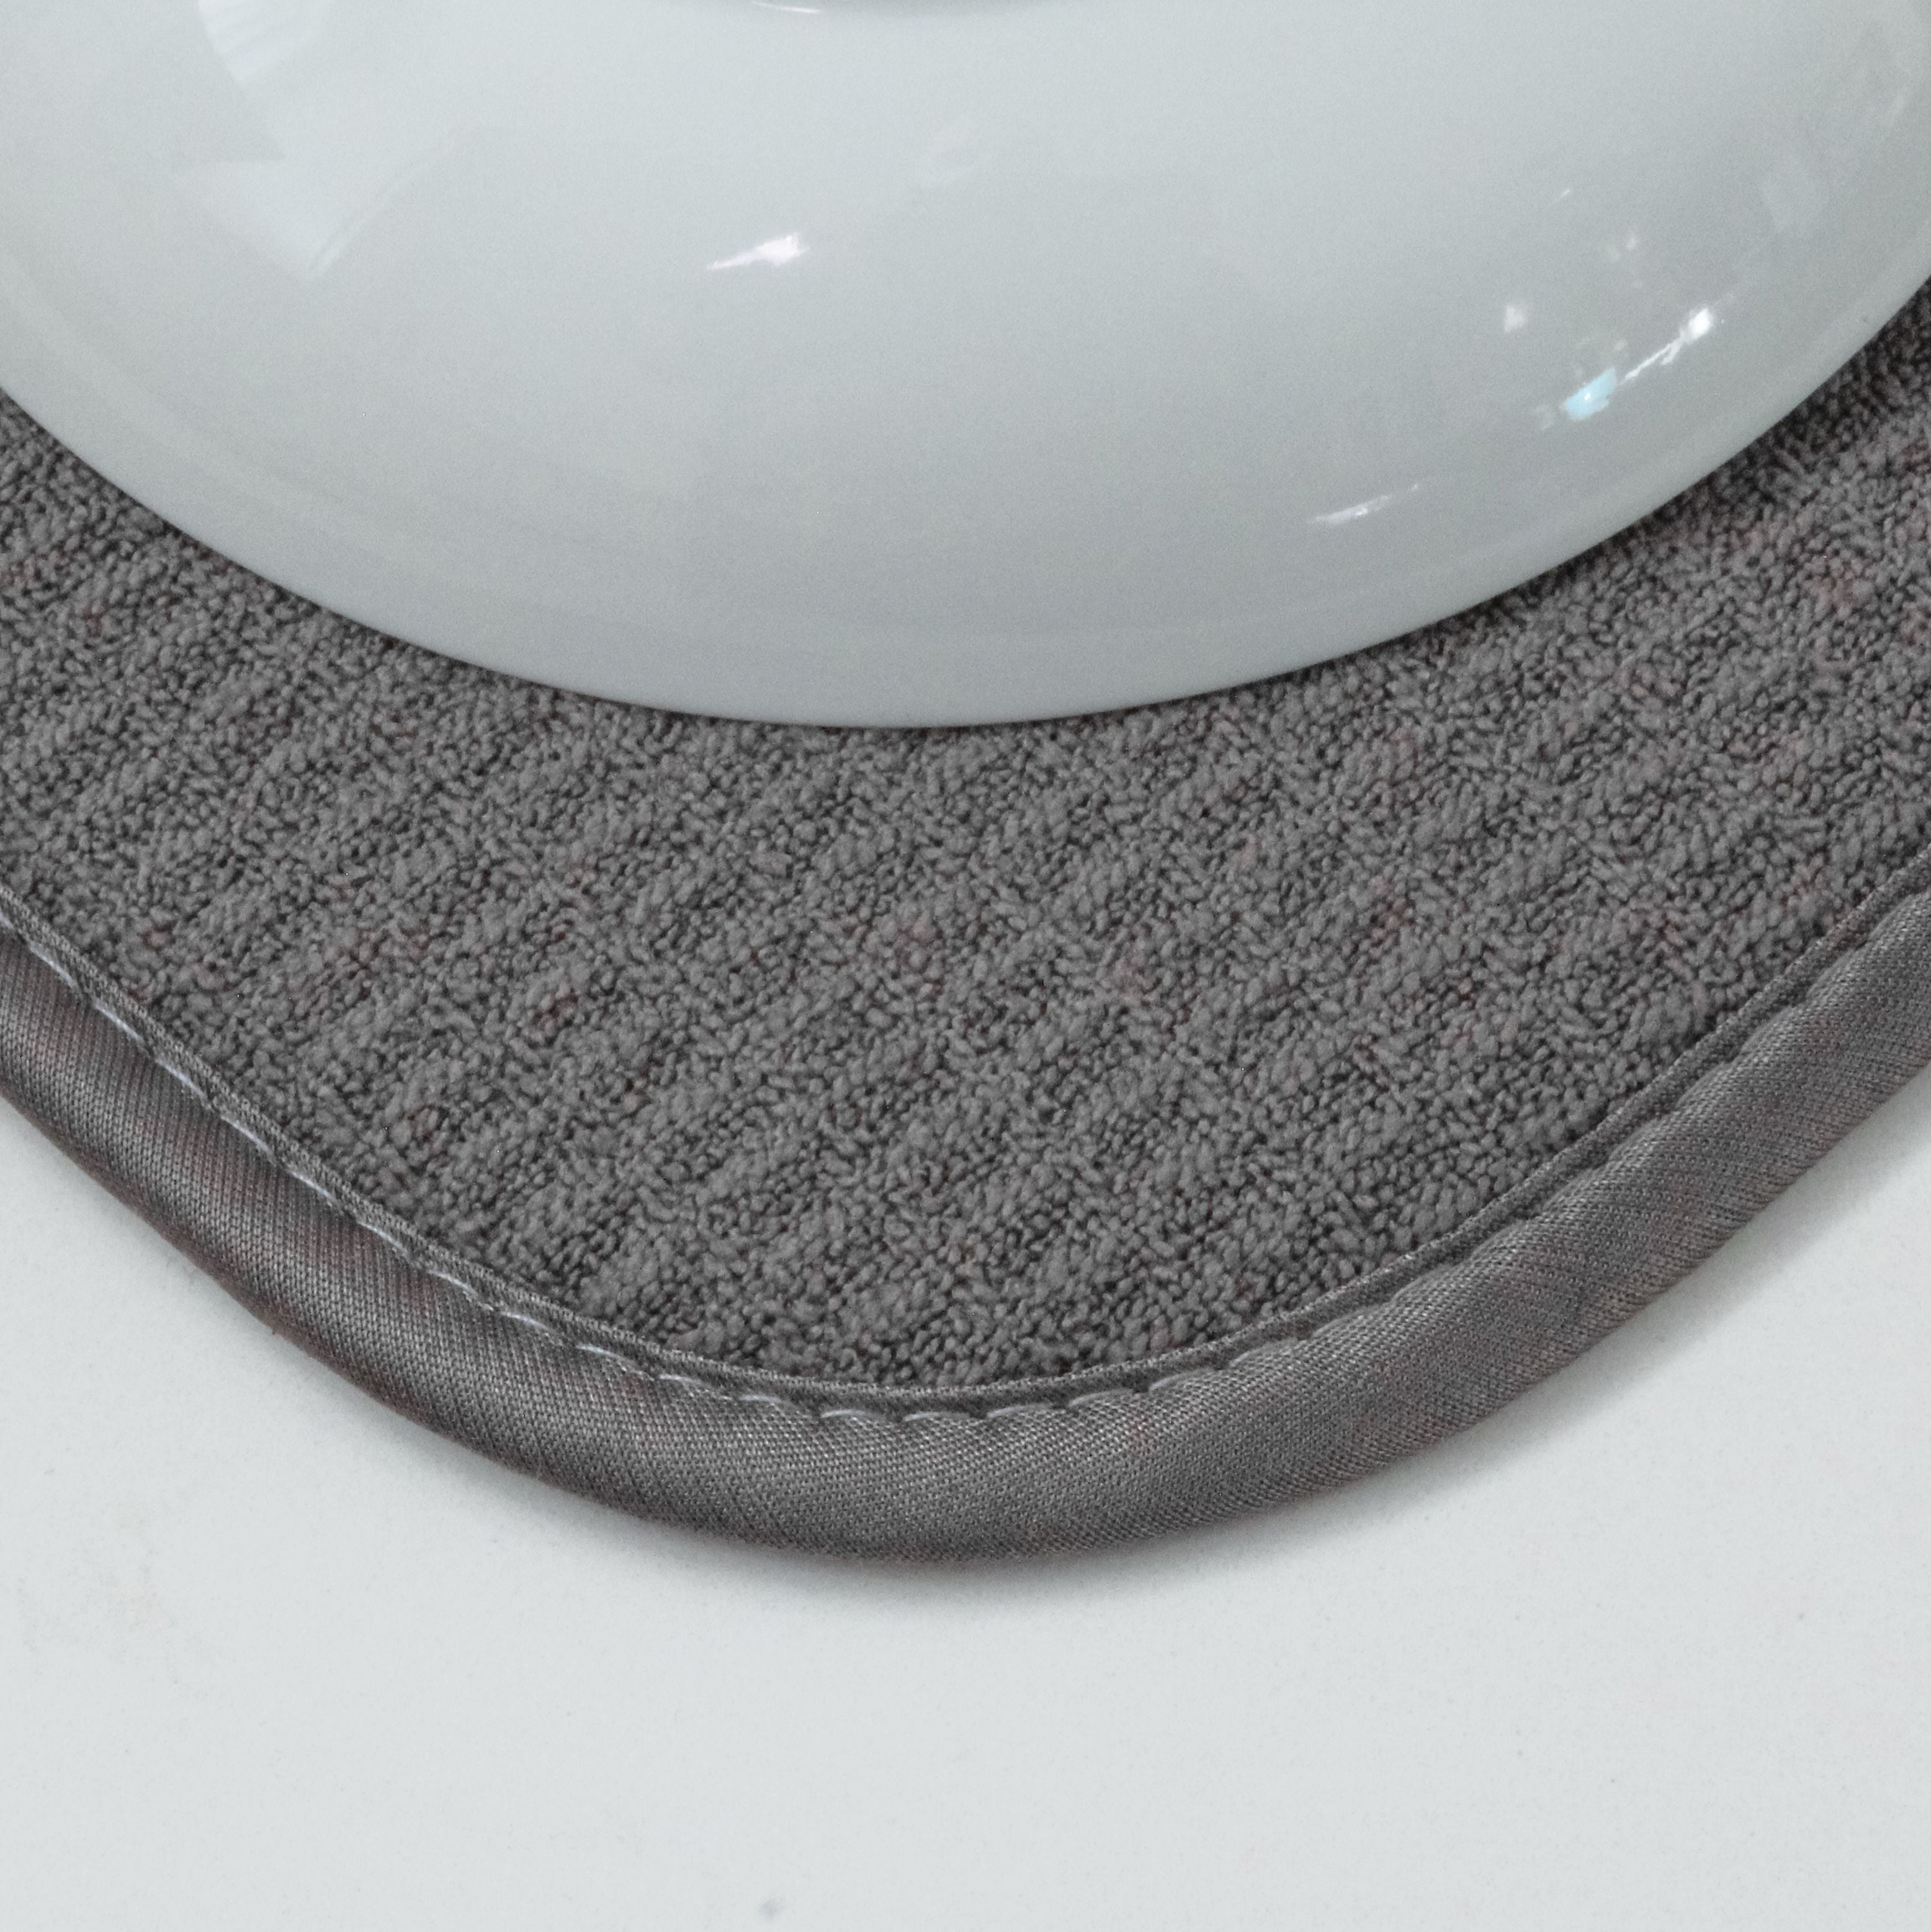 Grey Plaid Dish Drying Mat Soft Microfiber Draining Pad Non - Temu